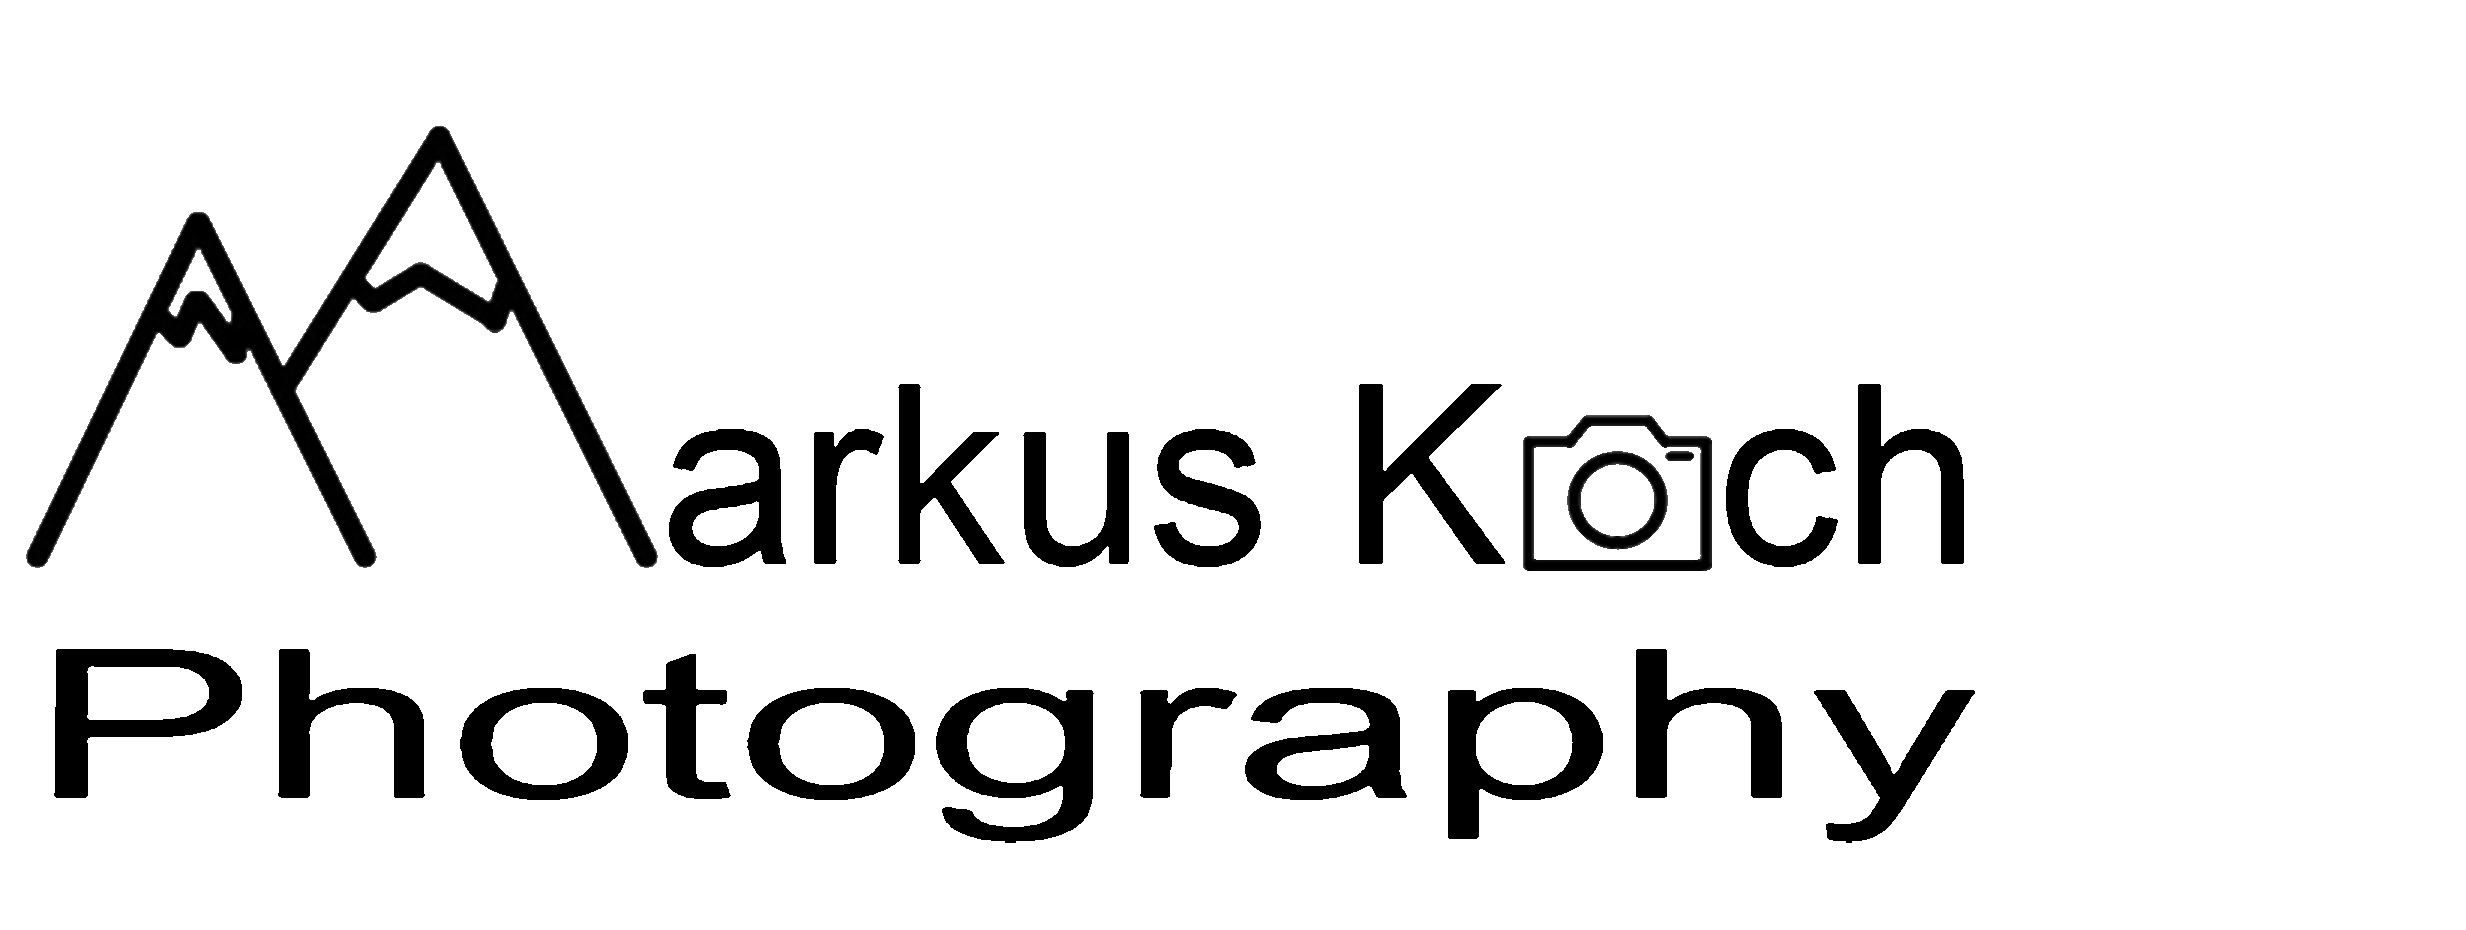 markuskochphotography.com